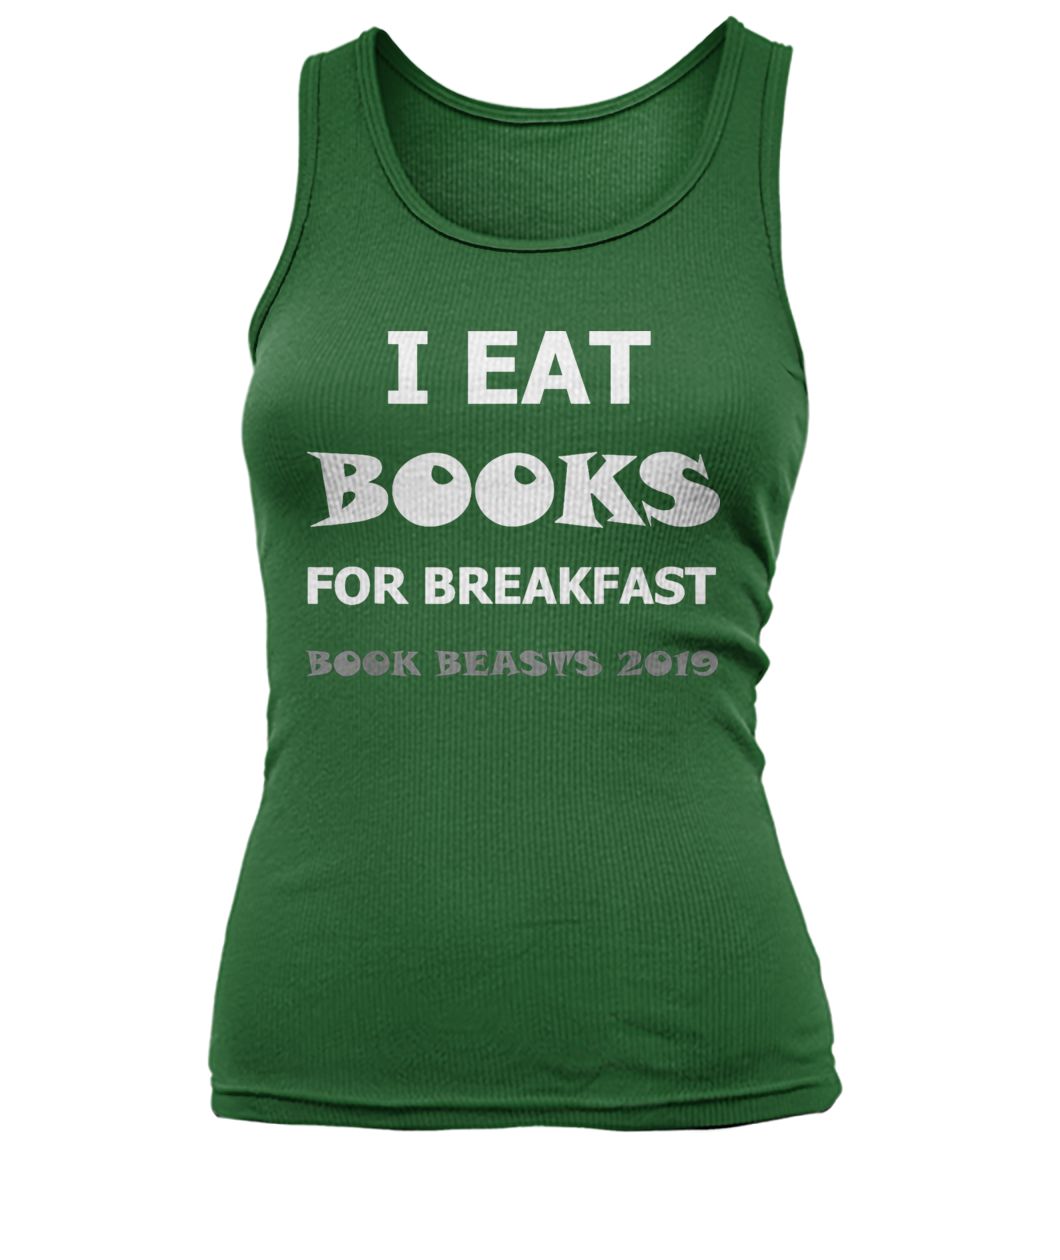 I eat books for breakfast book beasts 2019 women's tank top